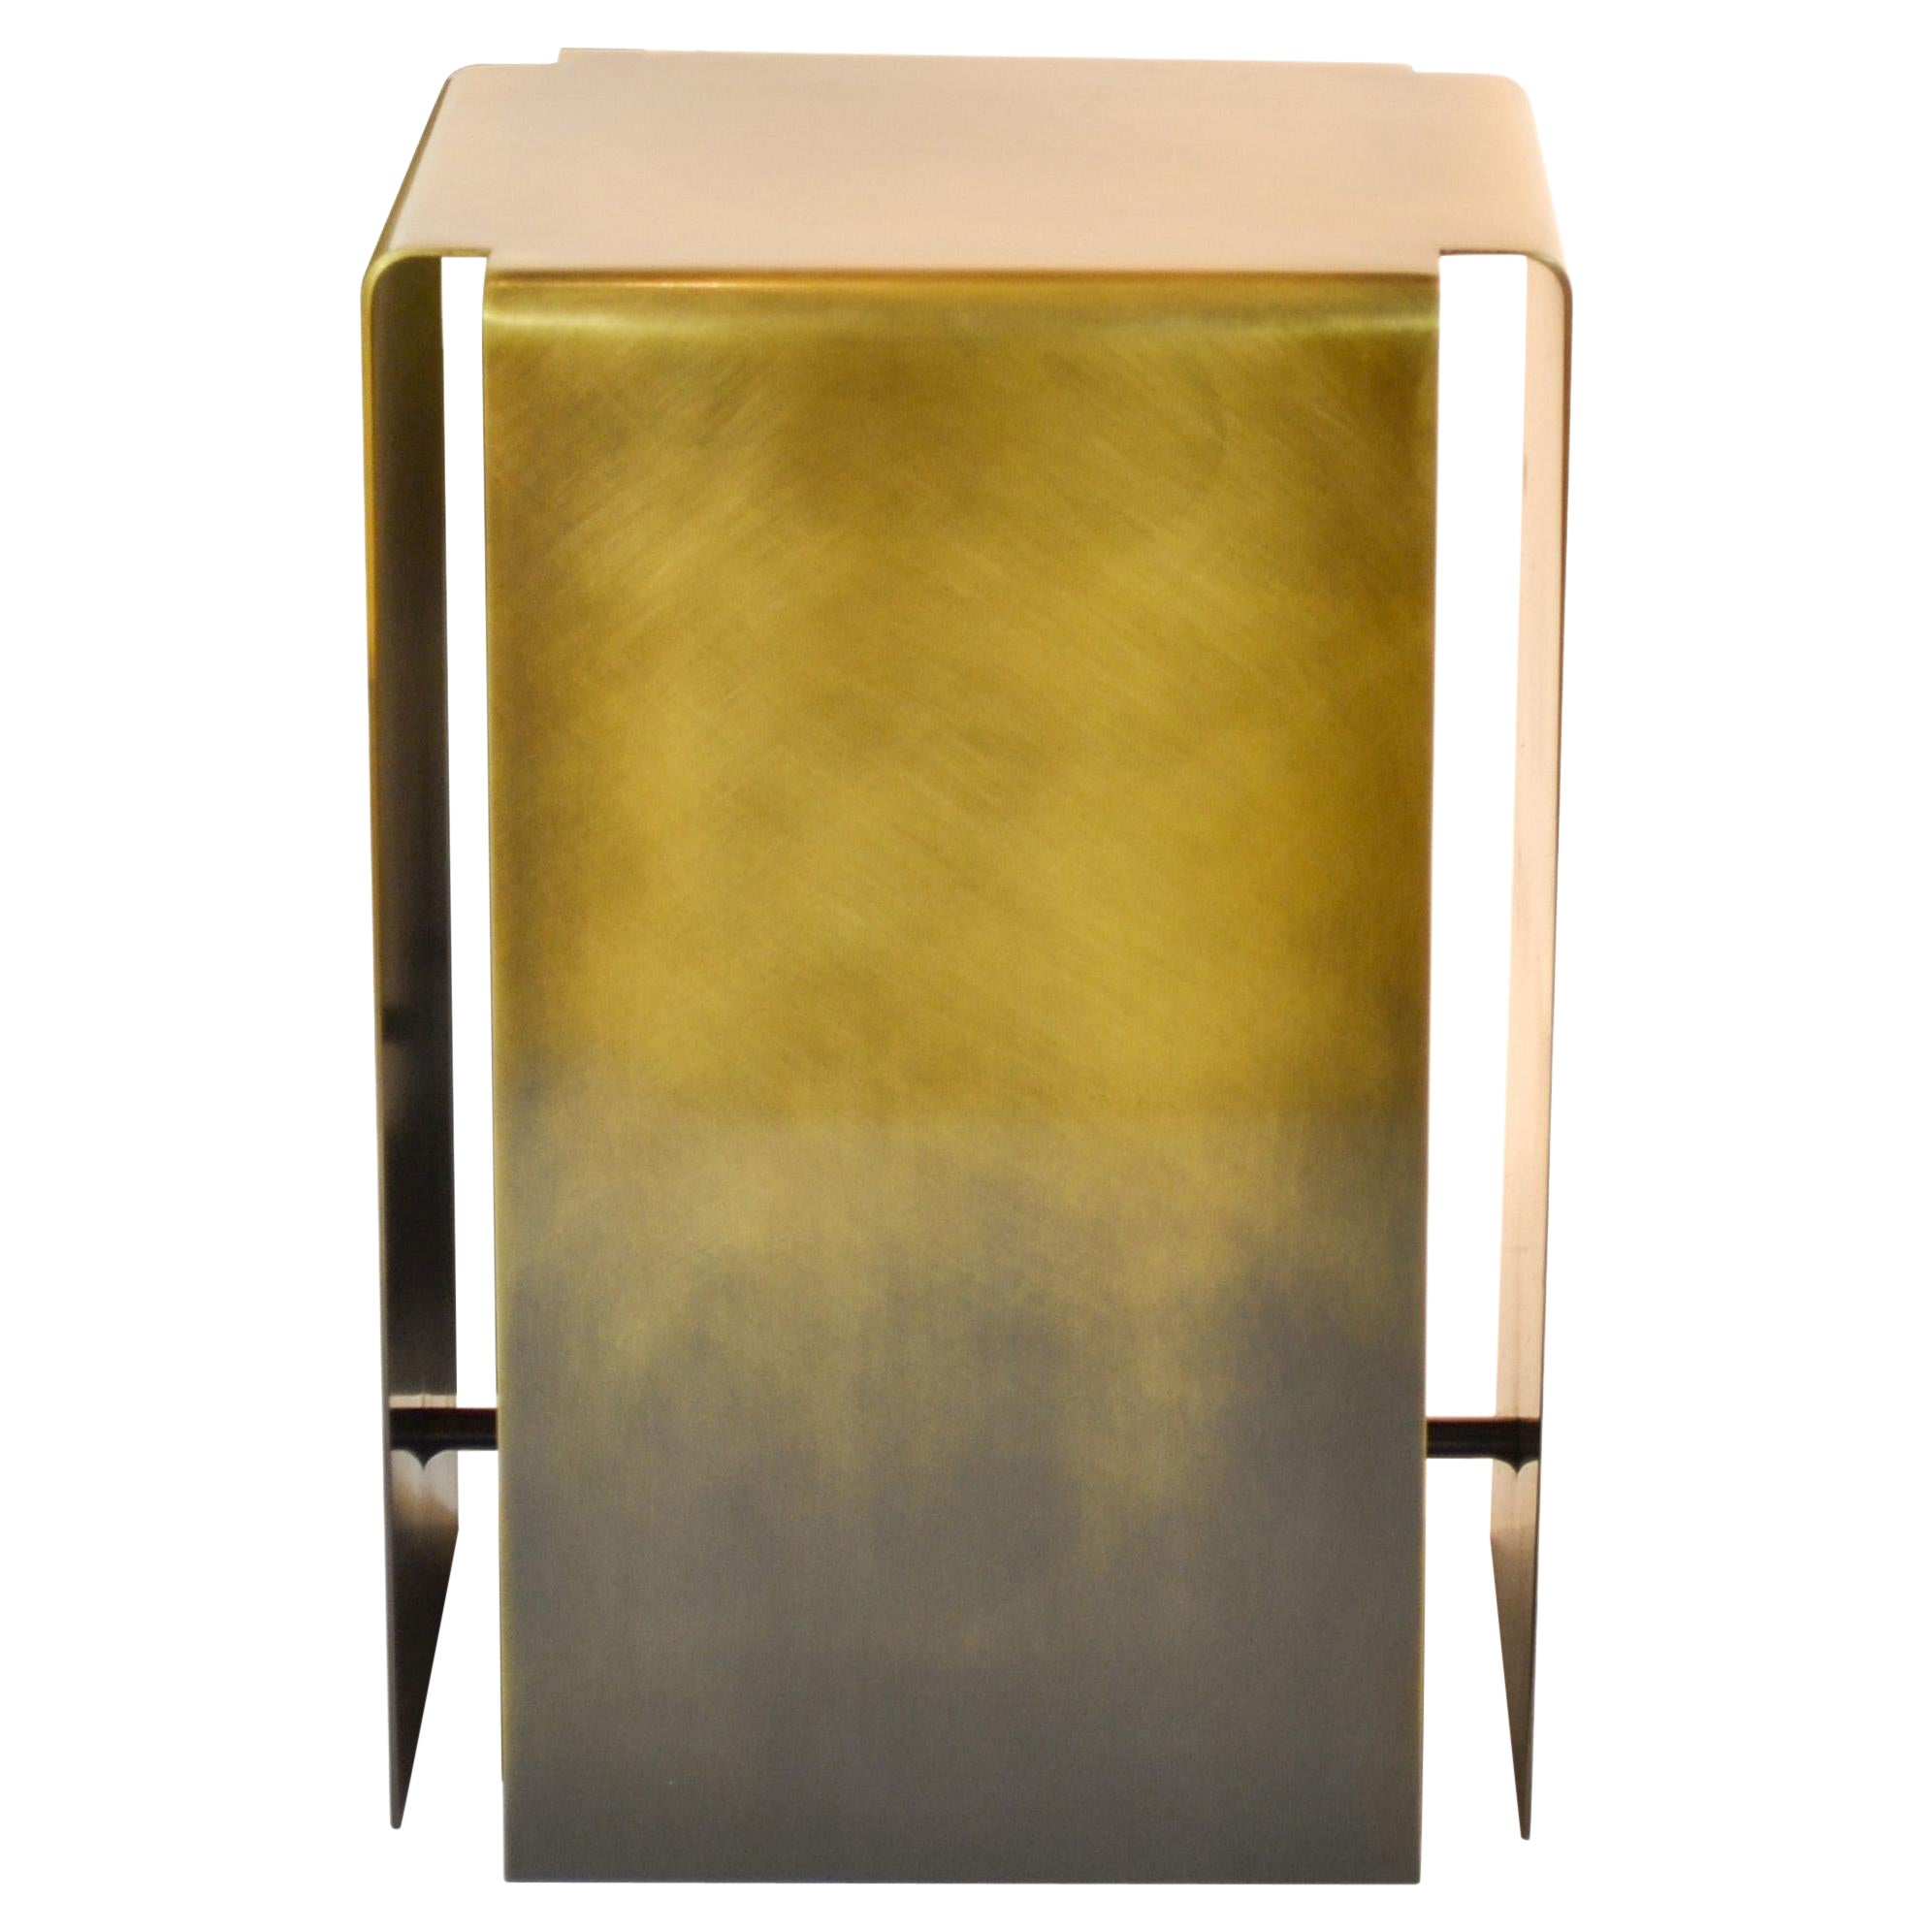 Table d'appoint en bronze baltique par Gentner Design